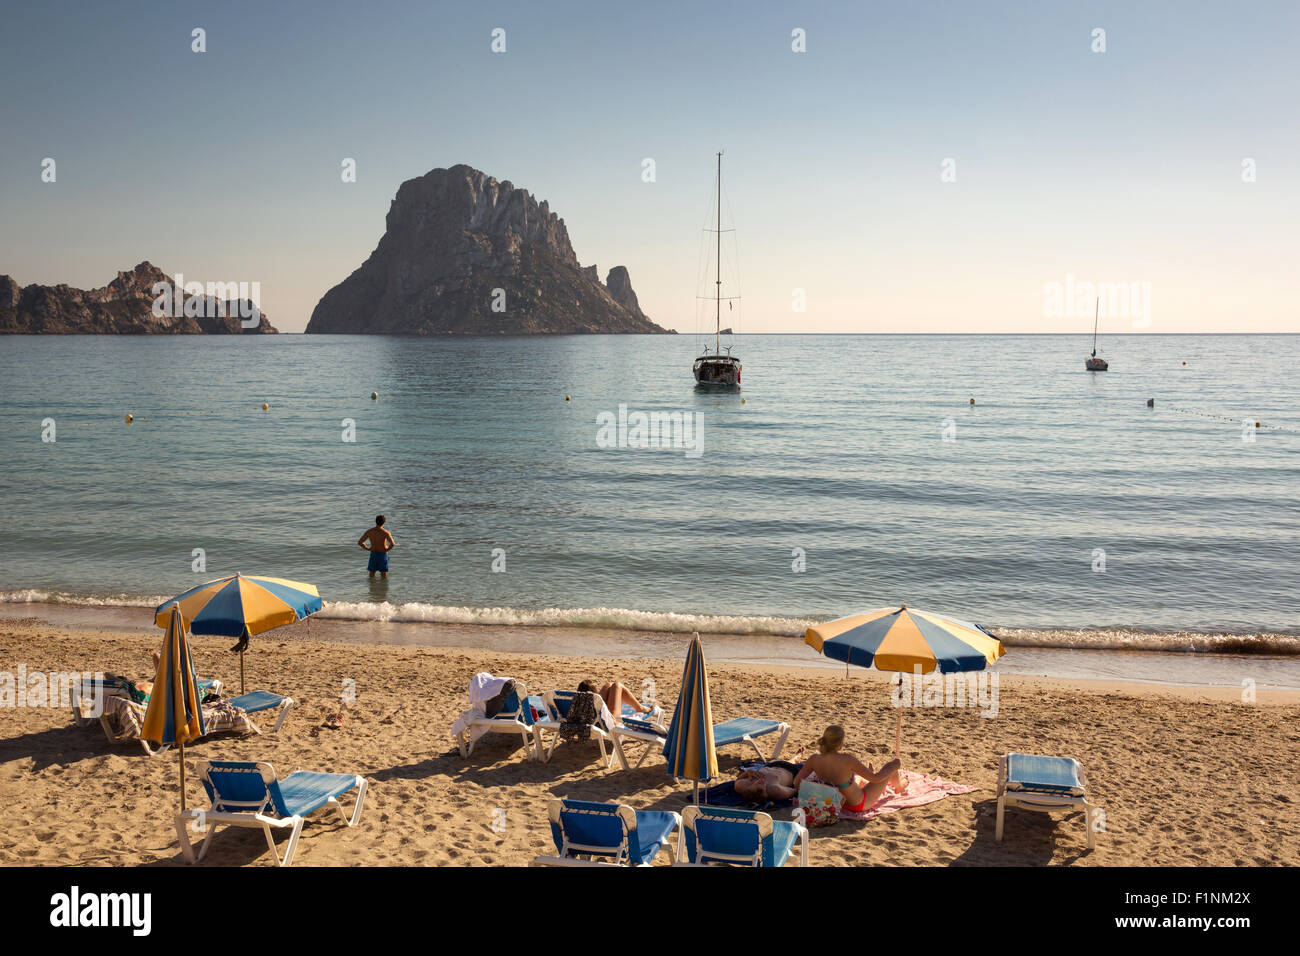 Ibiza, Es Vedra Rock visto da Cala d'hort (spiaggia). Foto Stock